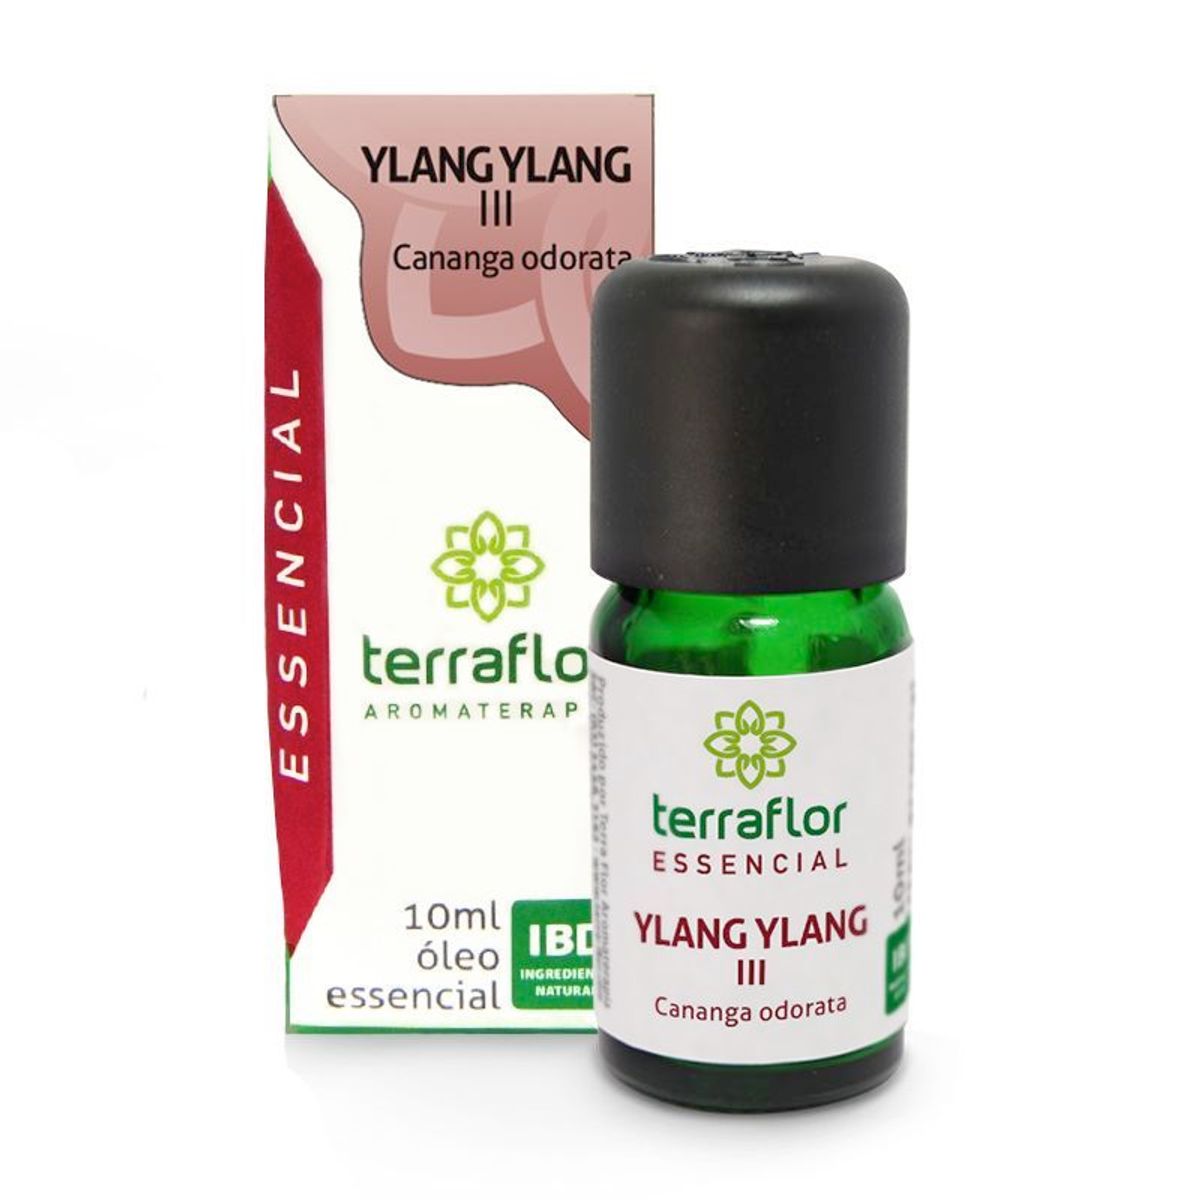 óleo Essencial Terra Flor Ylang Ylang Iii 10ml